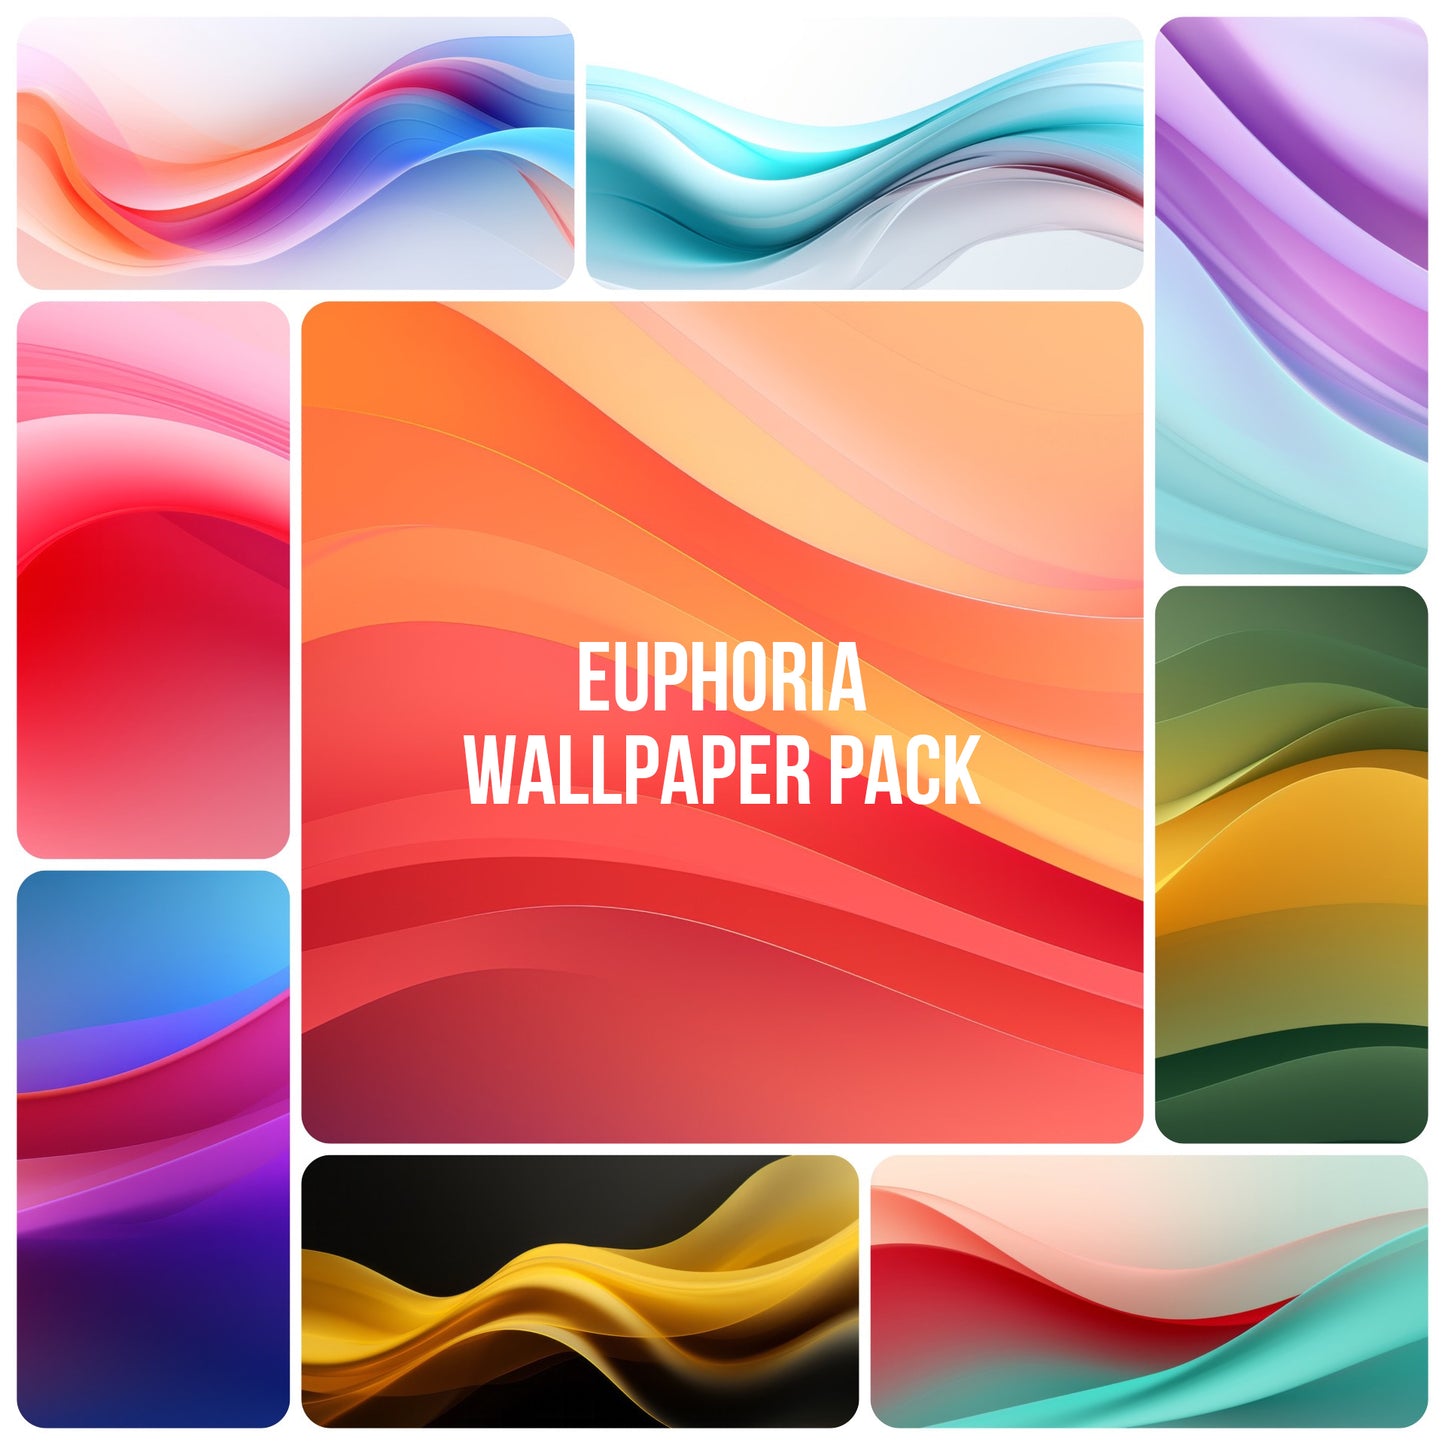 Euphoria Wallpaper Pack